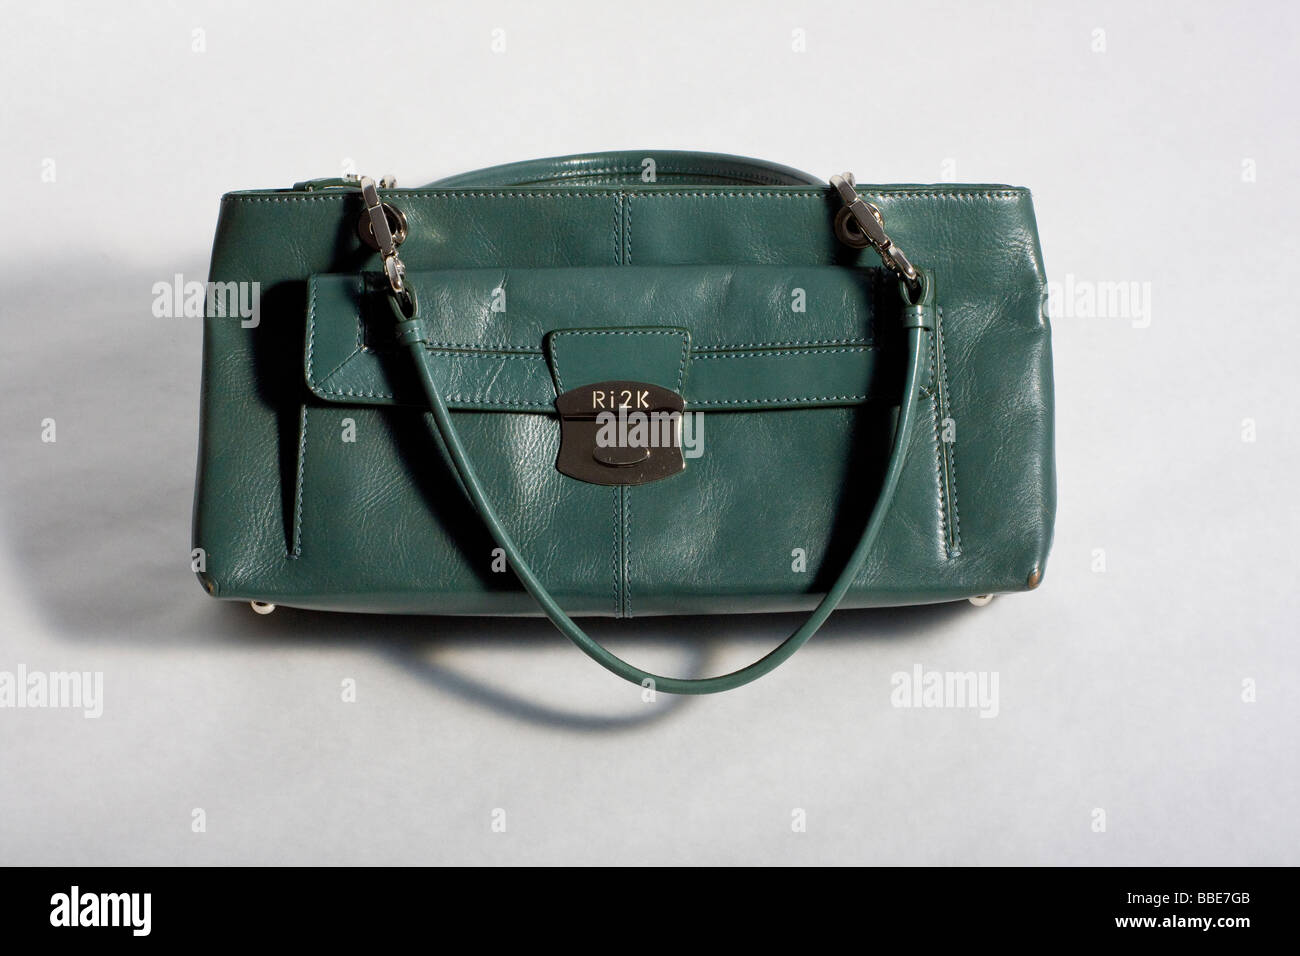 Studio shot of stylish green handbag, with metal buckle. Stock Photo